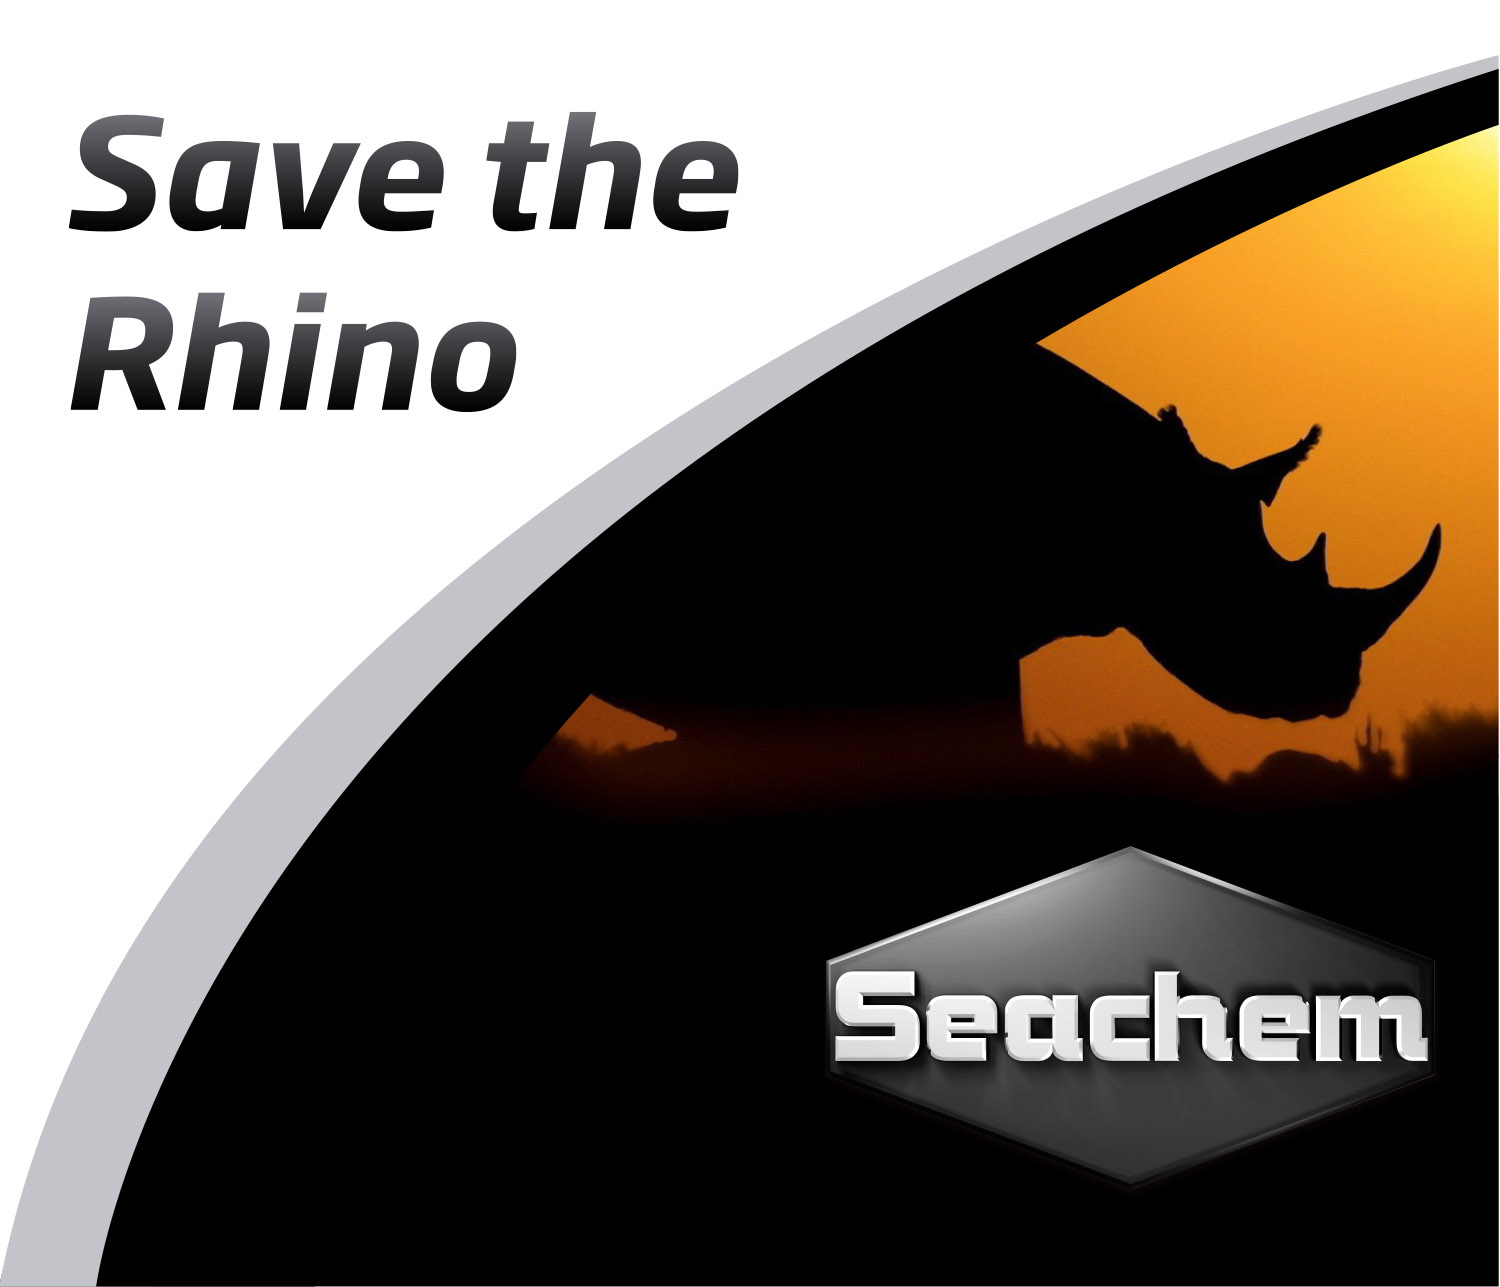 ¡Ayúdanos a salvar al rinoceronte africano!